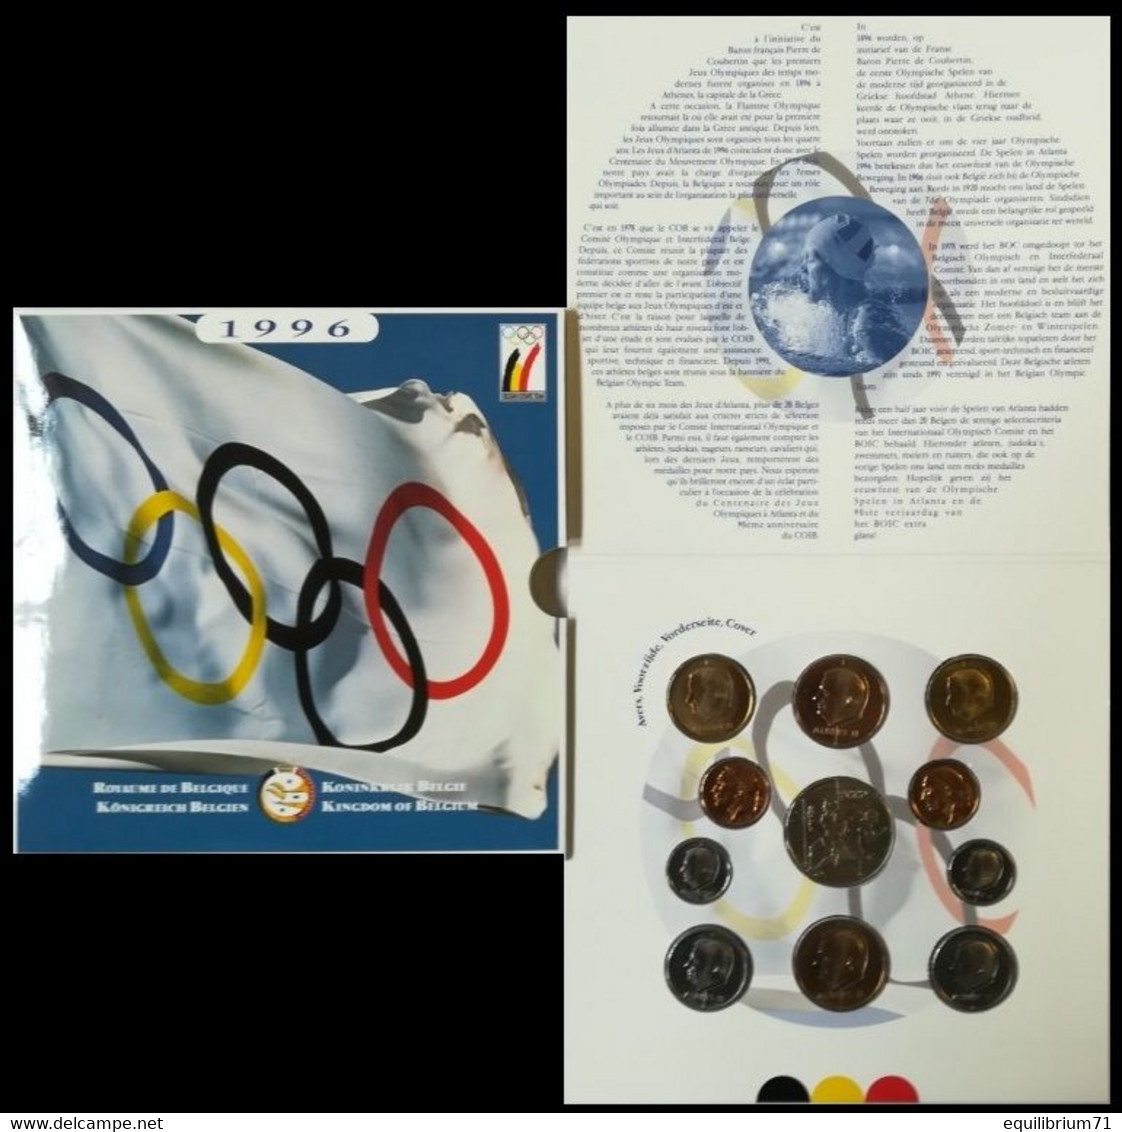 FLEURS DE COINS / STEMPELGLANS / STEMPELGLANZ - FDC - 100 Ans D'olypisme / 100 Jaar Olympische Spelen - (Atlanta) - 1996 - FDC, BU, Proofs & Presentation Cases